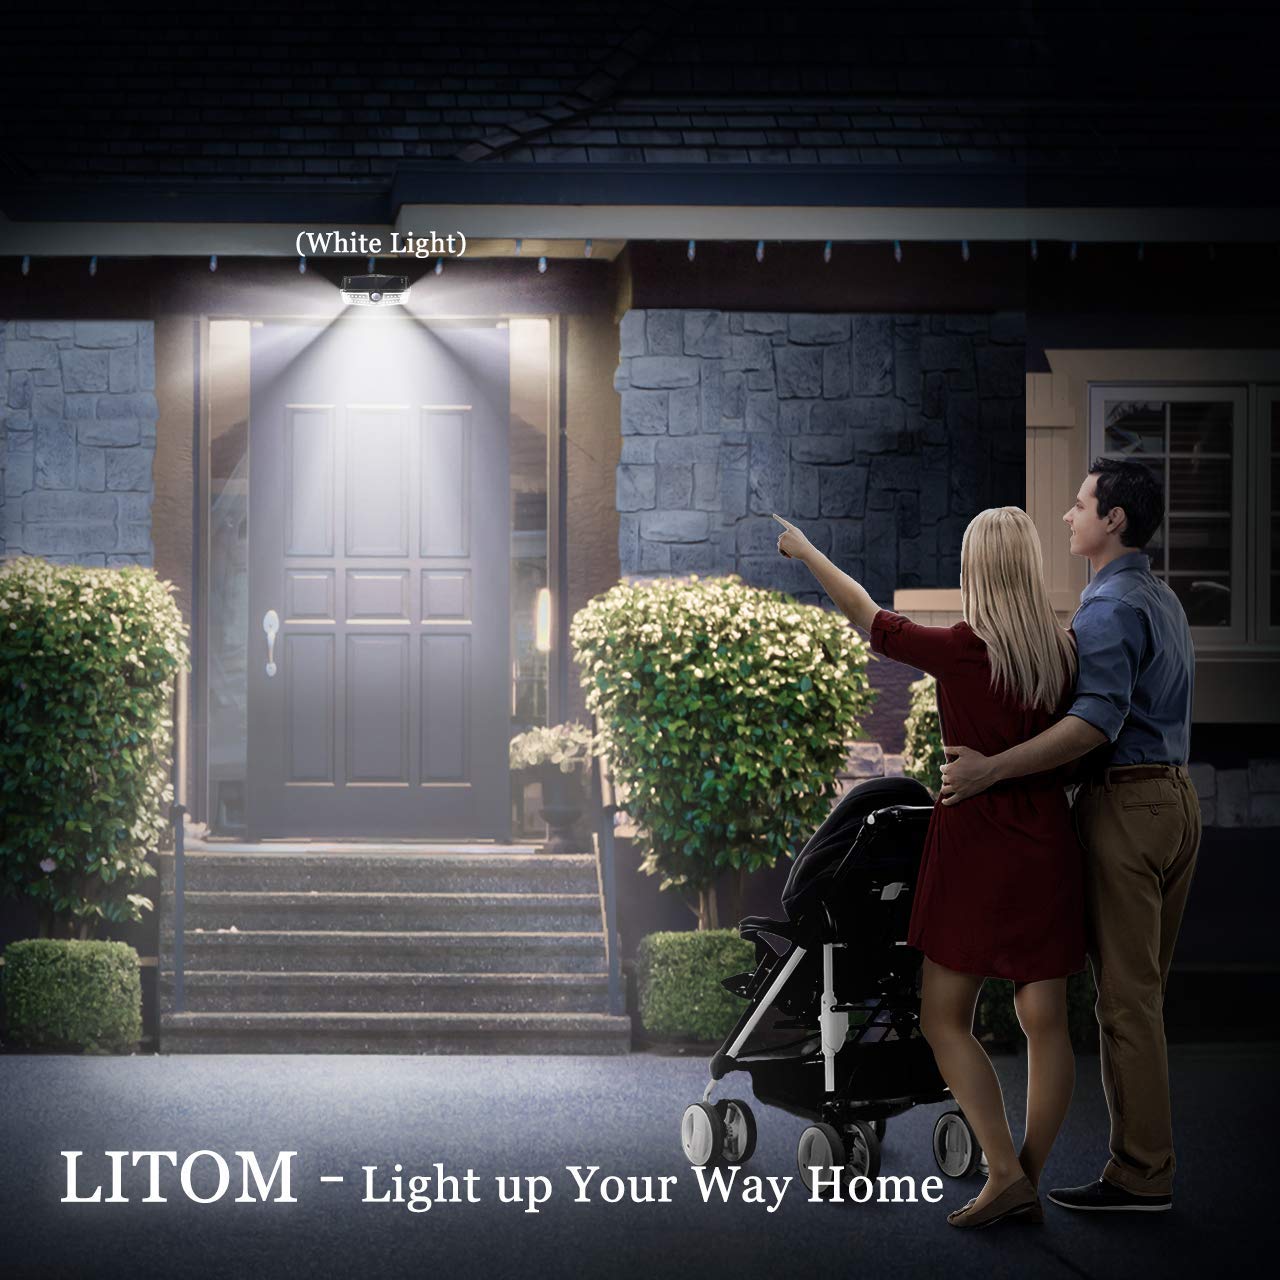 Best Outdoor Motion Sensor Lights | Outdoor Security & Safety Lights